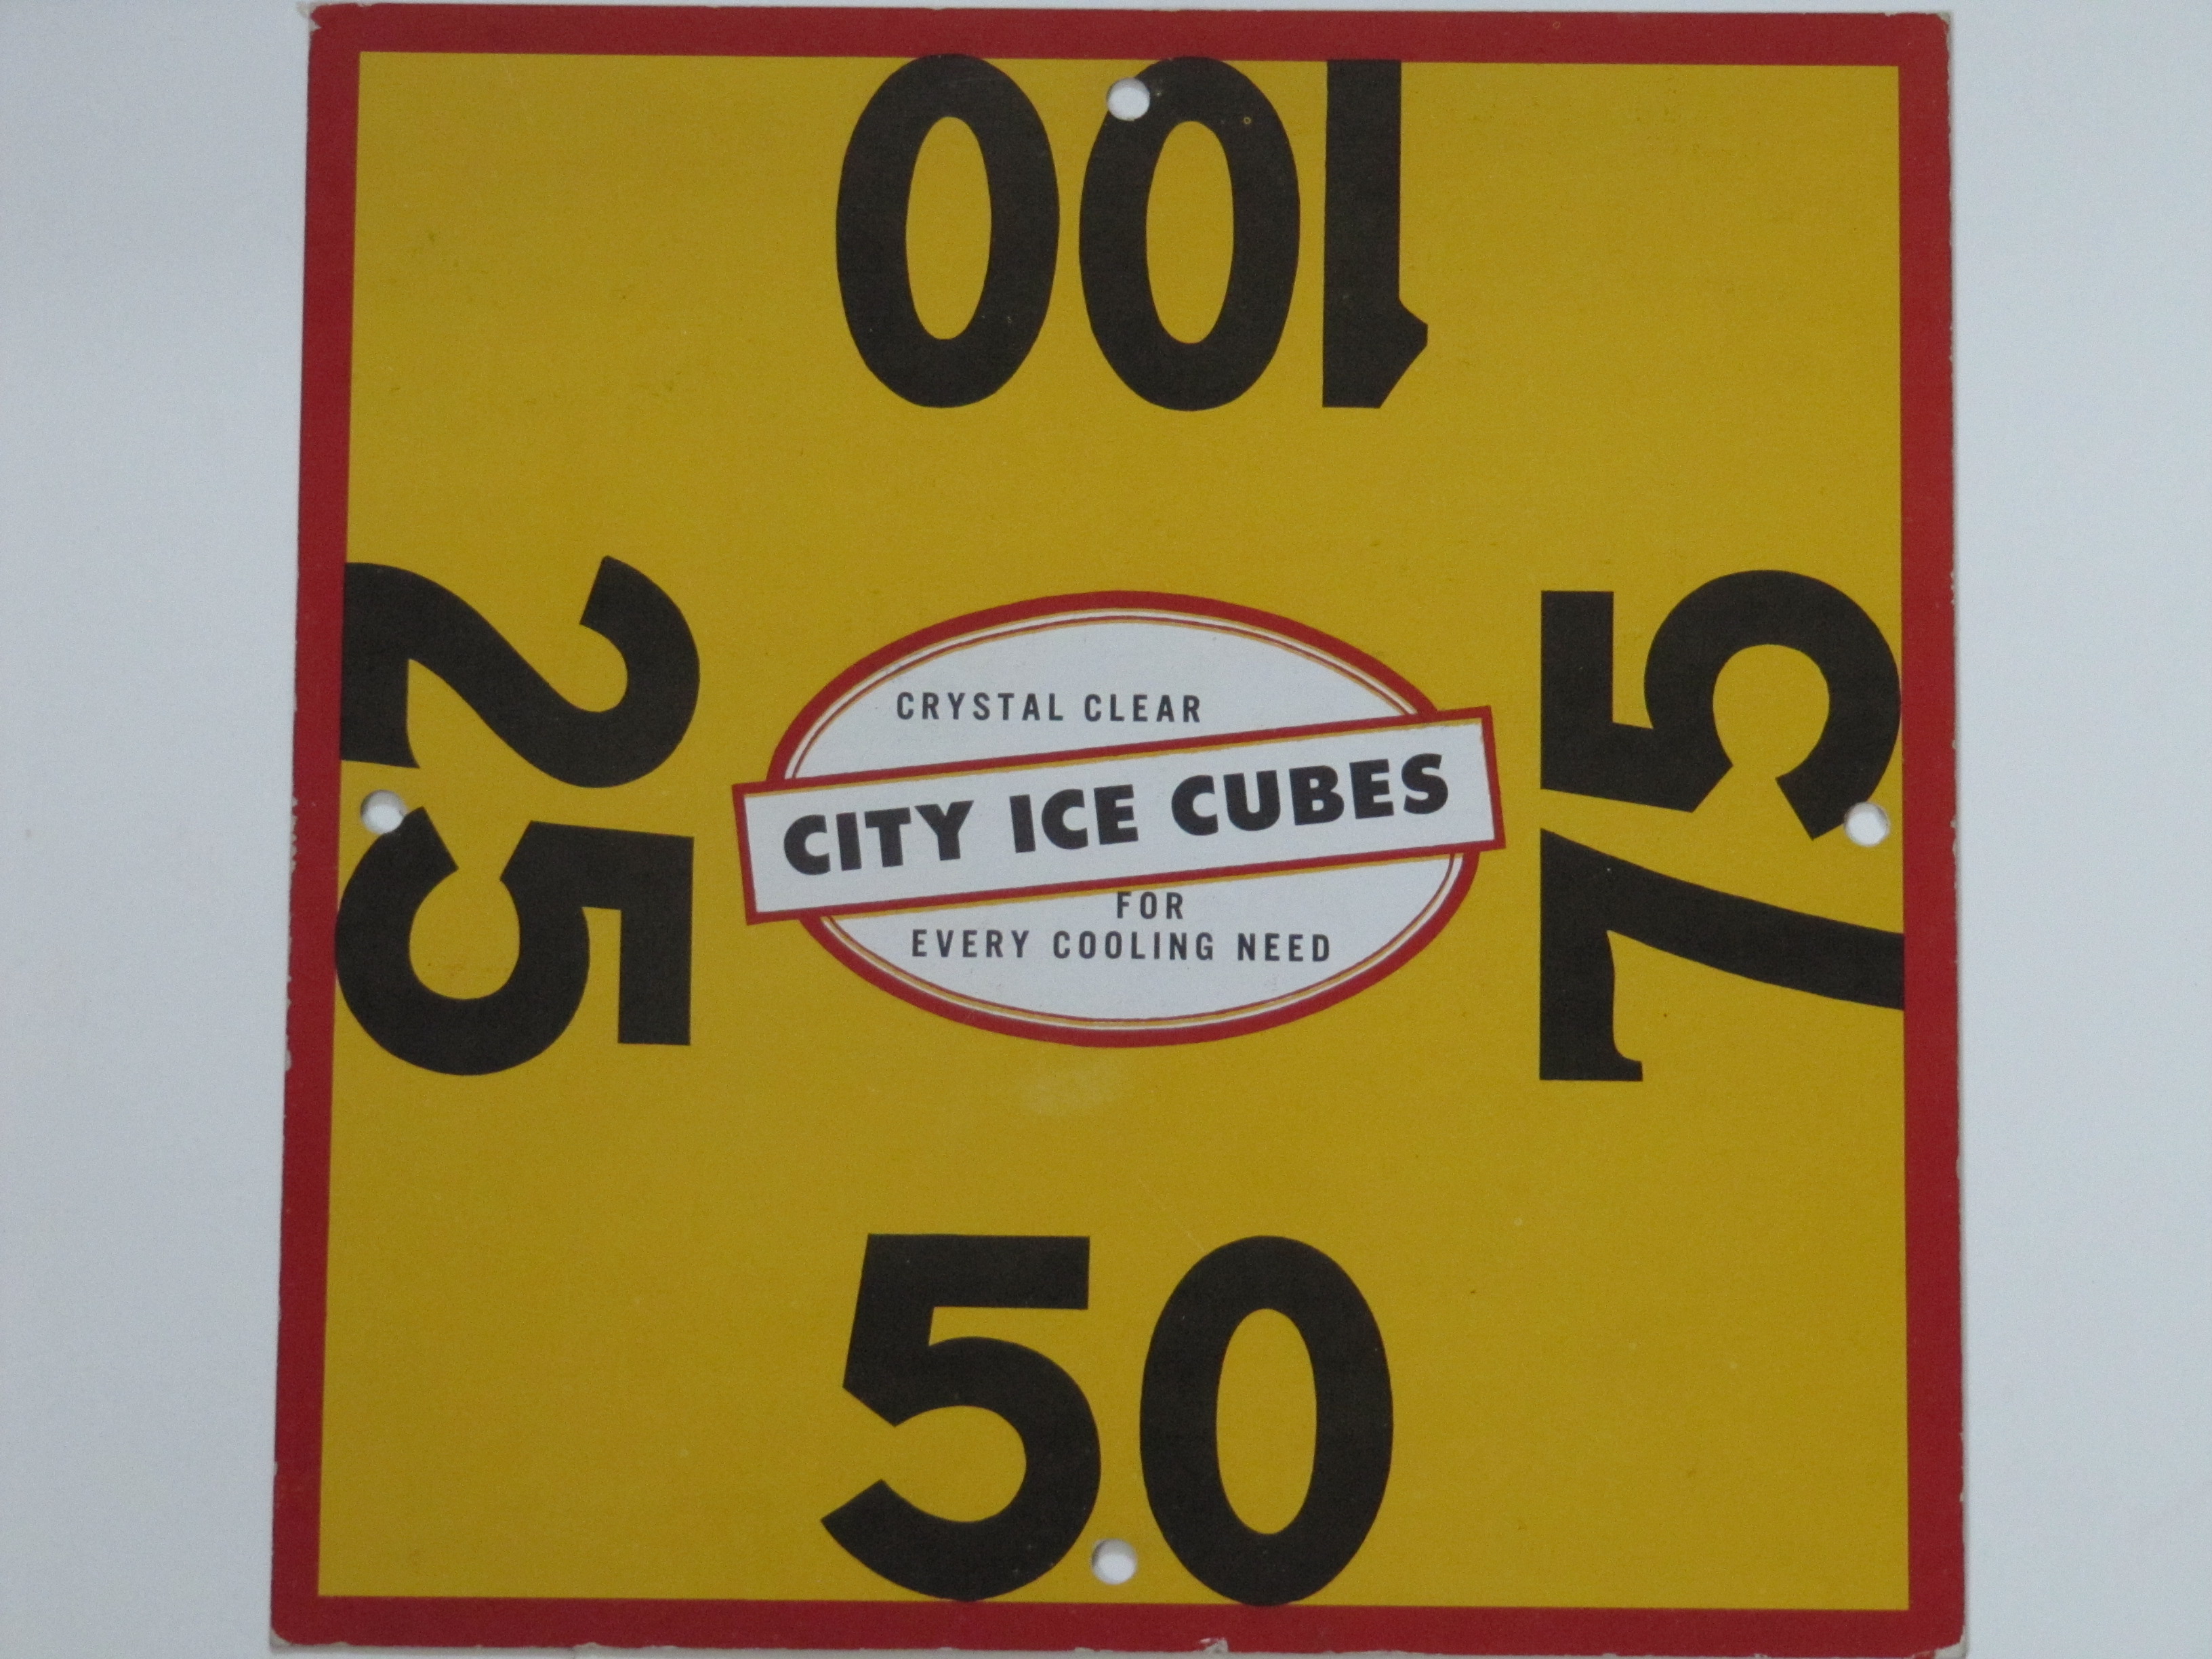 City Ice Cubes